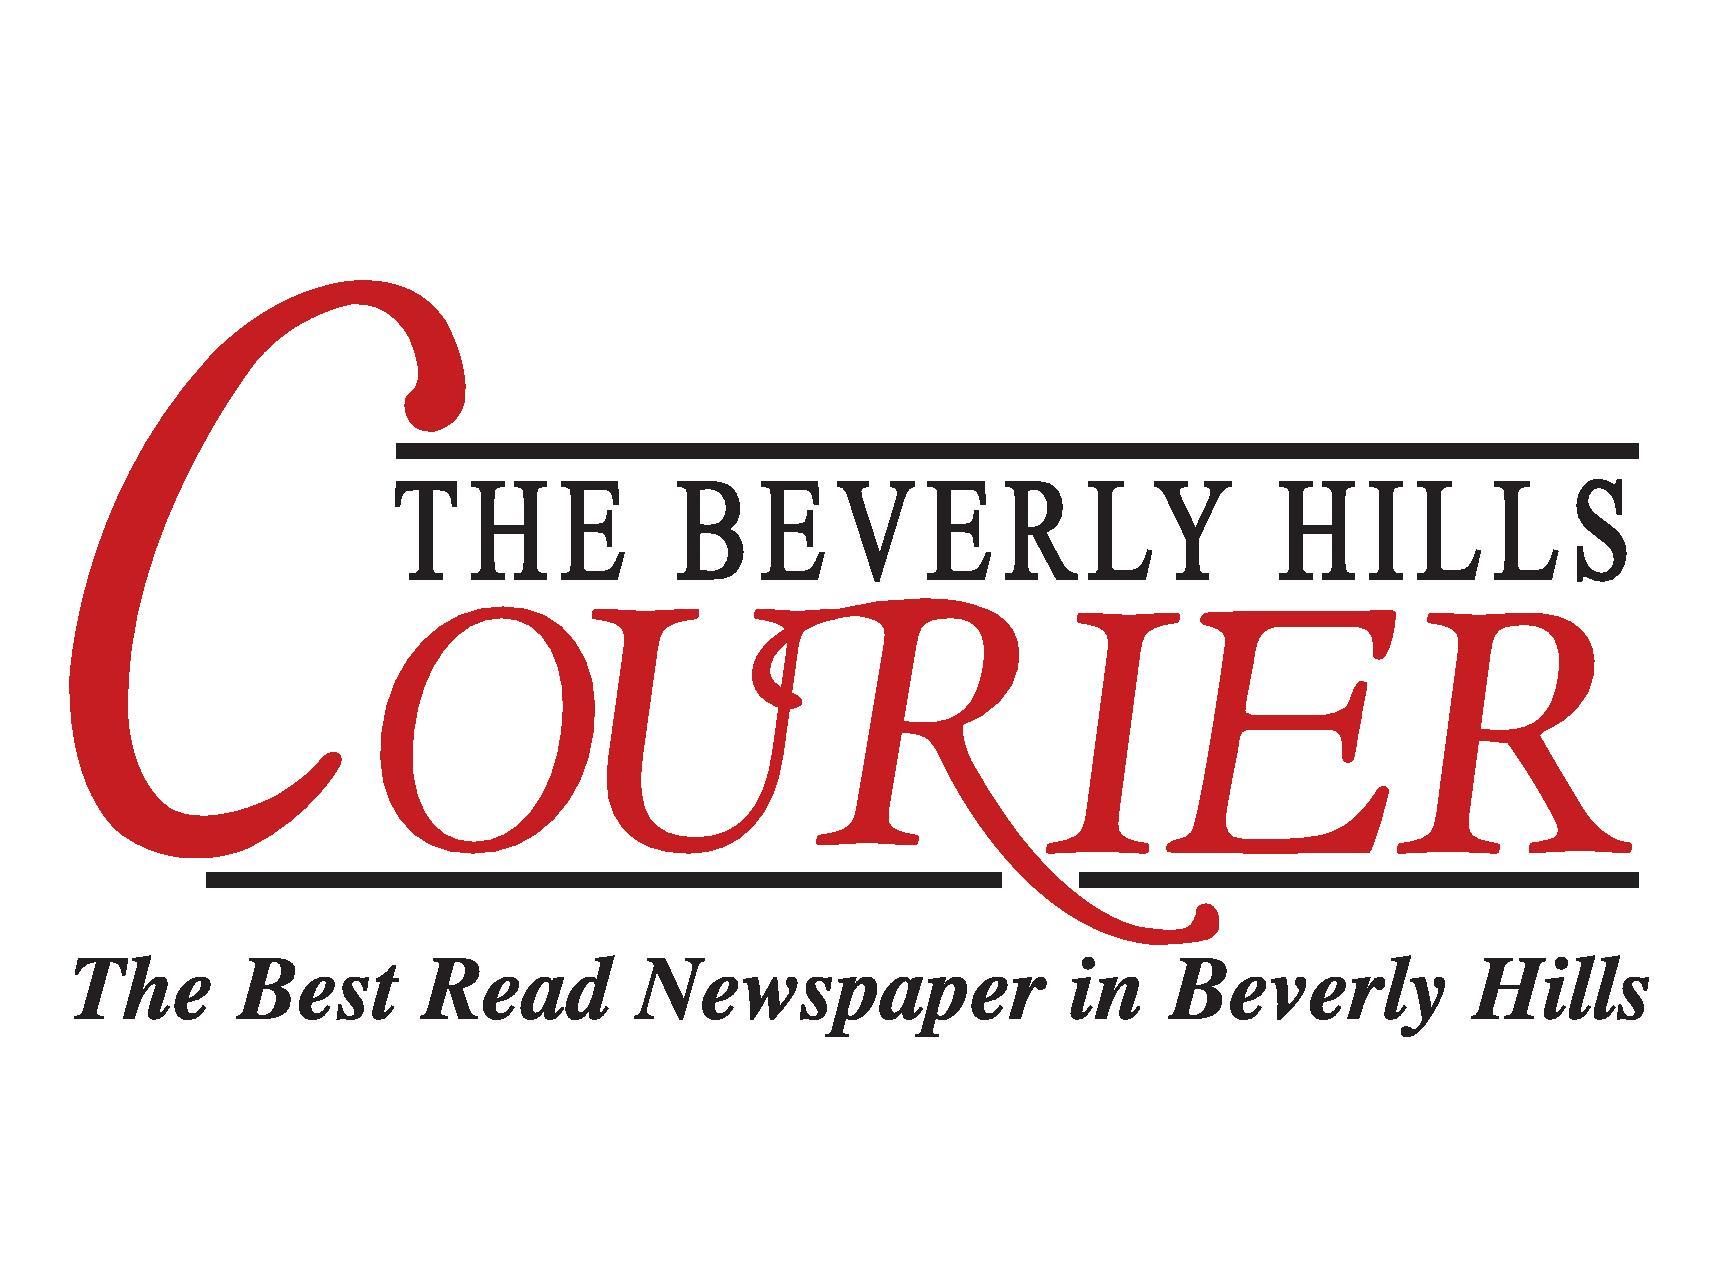 Beverly Hills logo. J Beverly Hills логотип. Beverly Hills краска логотип. Thompson Beverly Hills отель логотип.